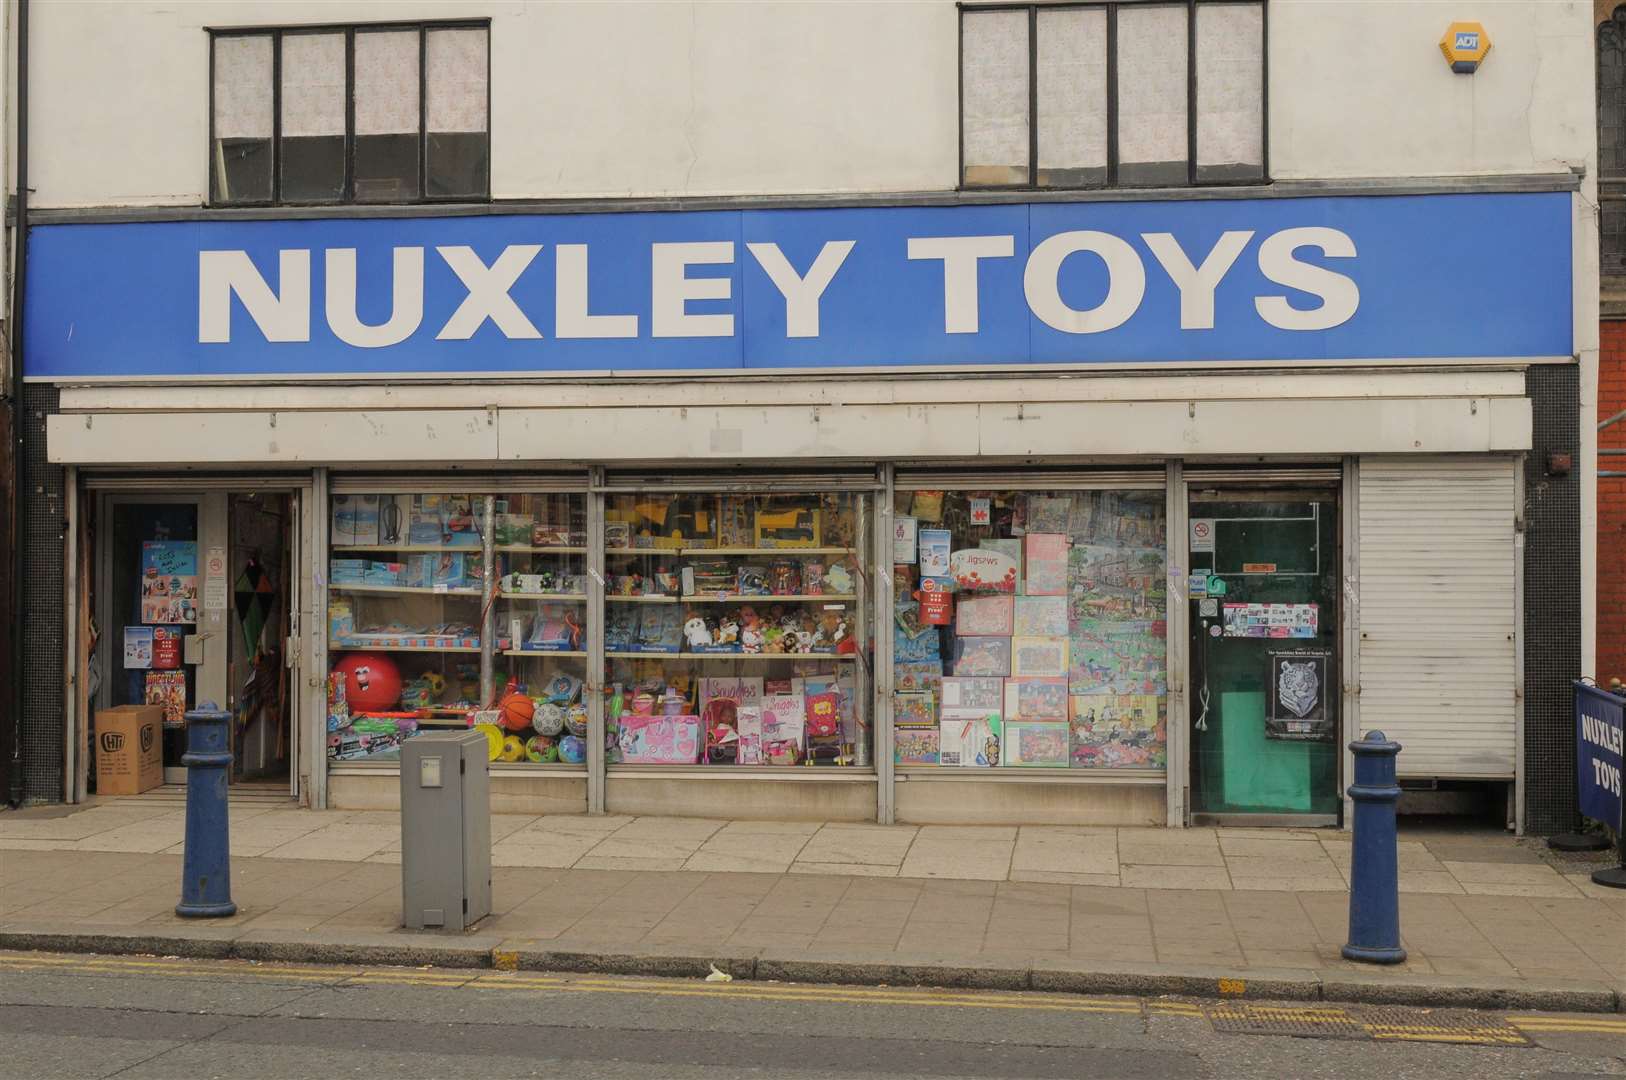 Nuxley Toys, Milton Road, Gravesend. Picture: Steve Crispe